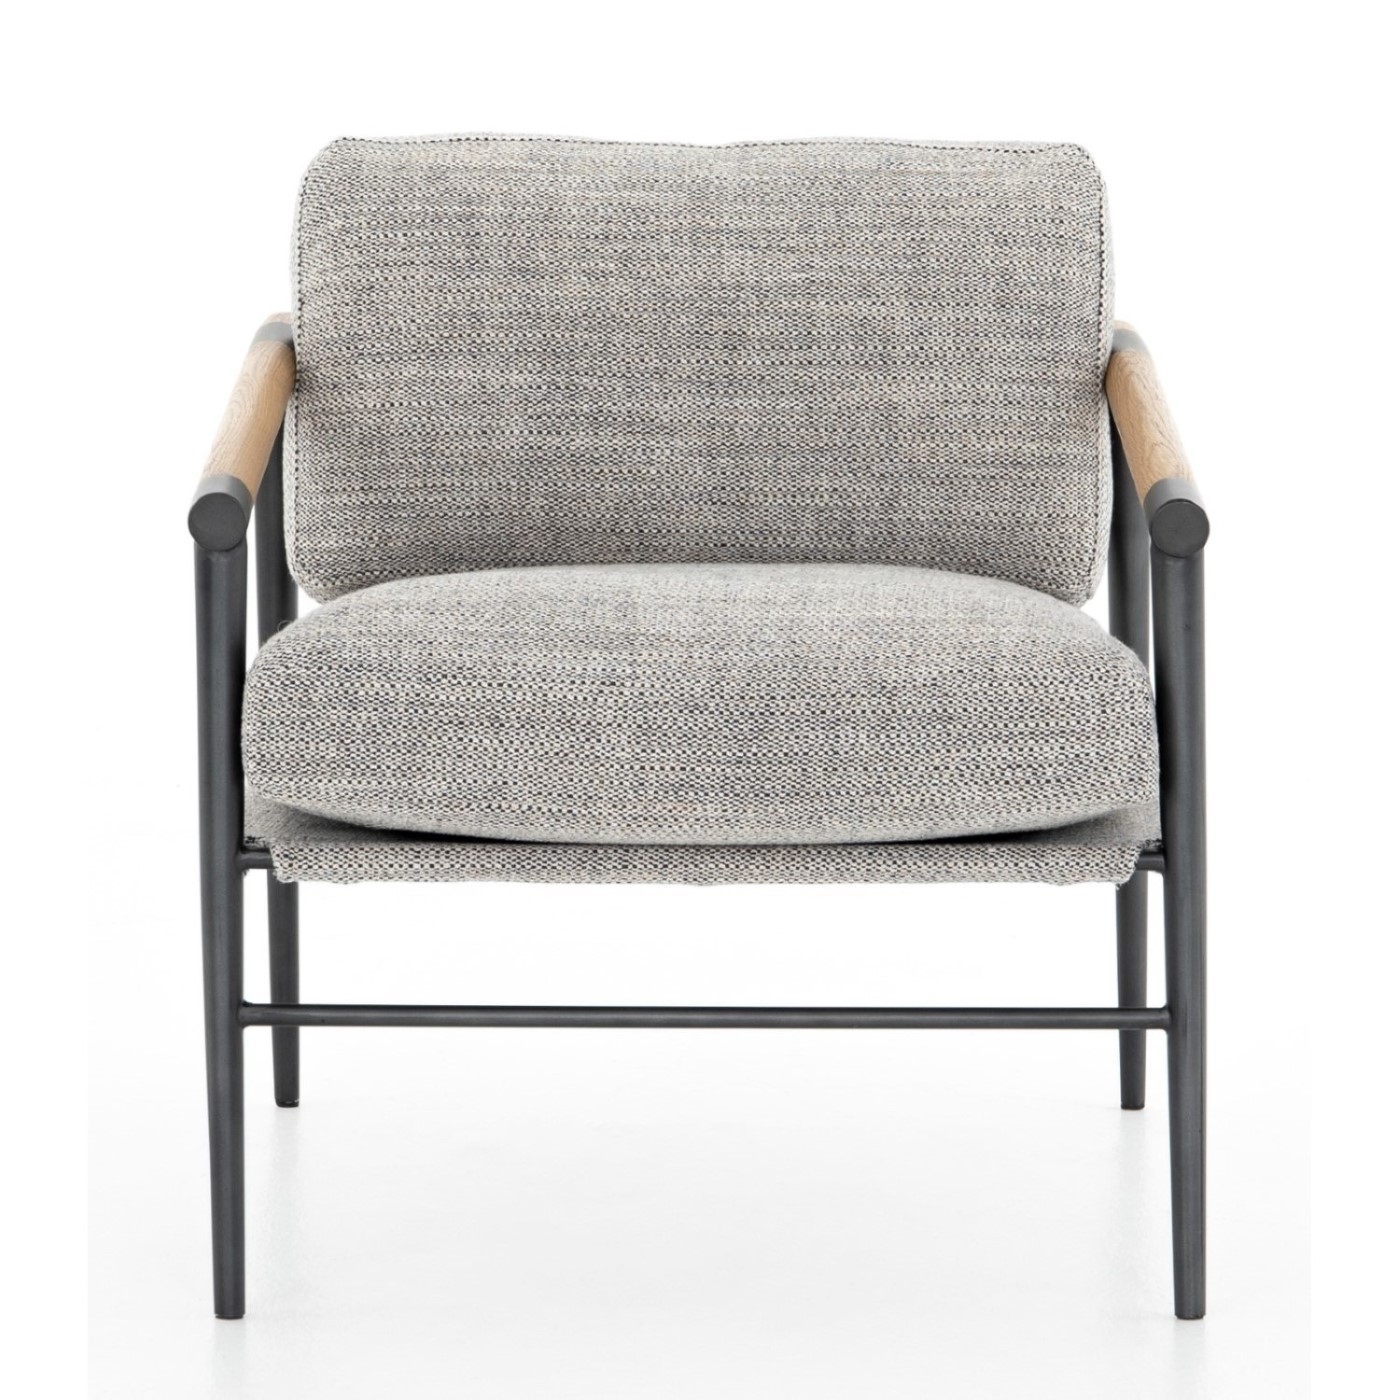 Zander Modern Classic Grey Upholstered Oak Wood Steel Arm Chair - Image 1